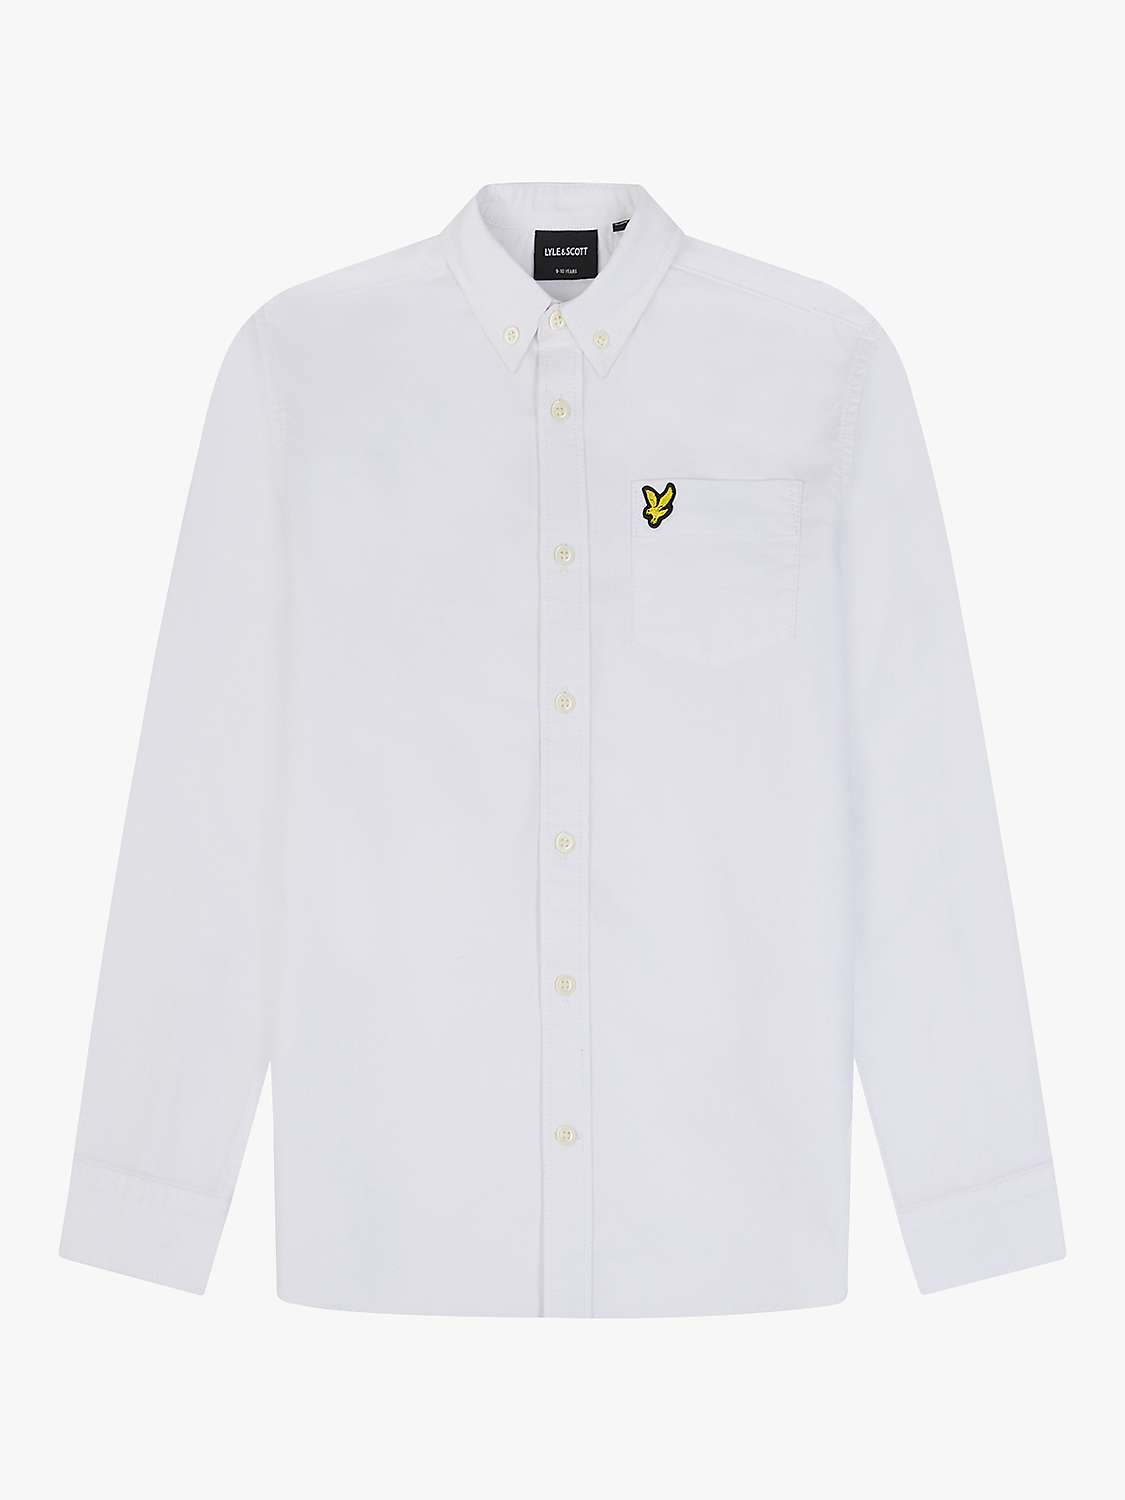 Buy Lyle & Scott Kids' Cotton Oxford Shirt, White Online at johnlewis.com